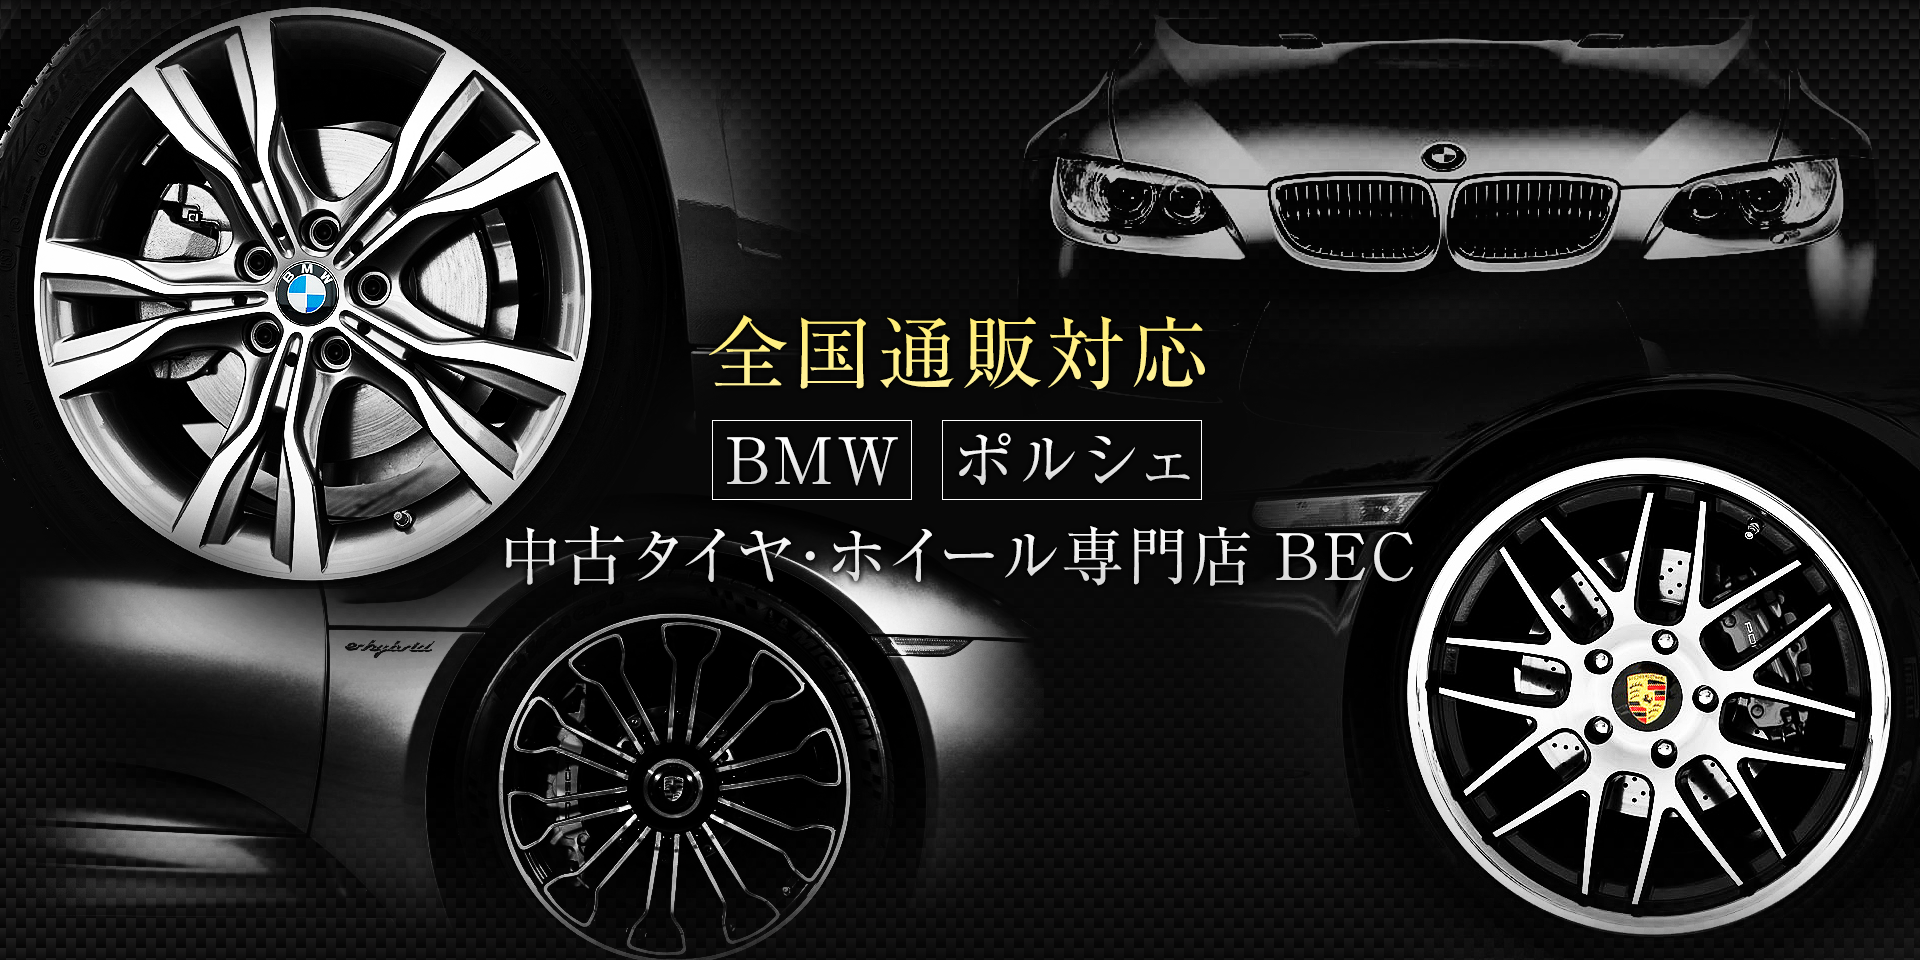 BMW･ポルシェ用 中古ホイール･タイヤ販売･買取専門店 BEC